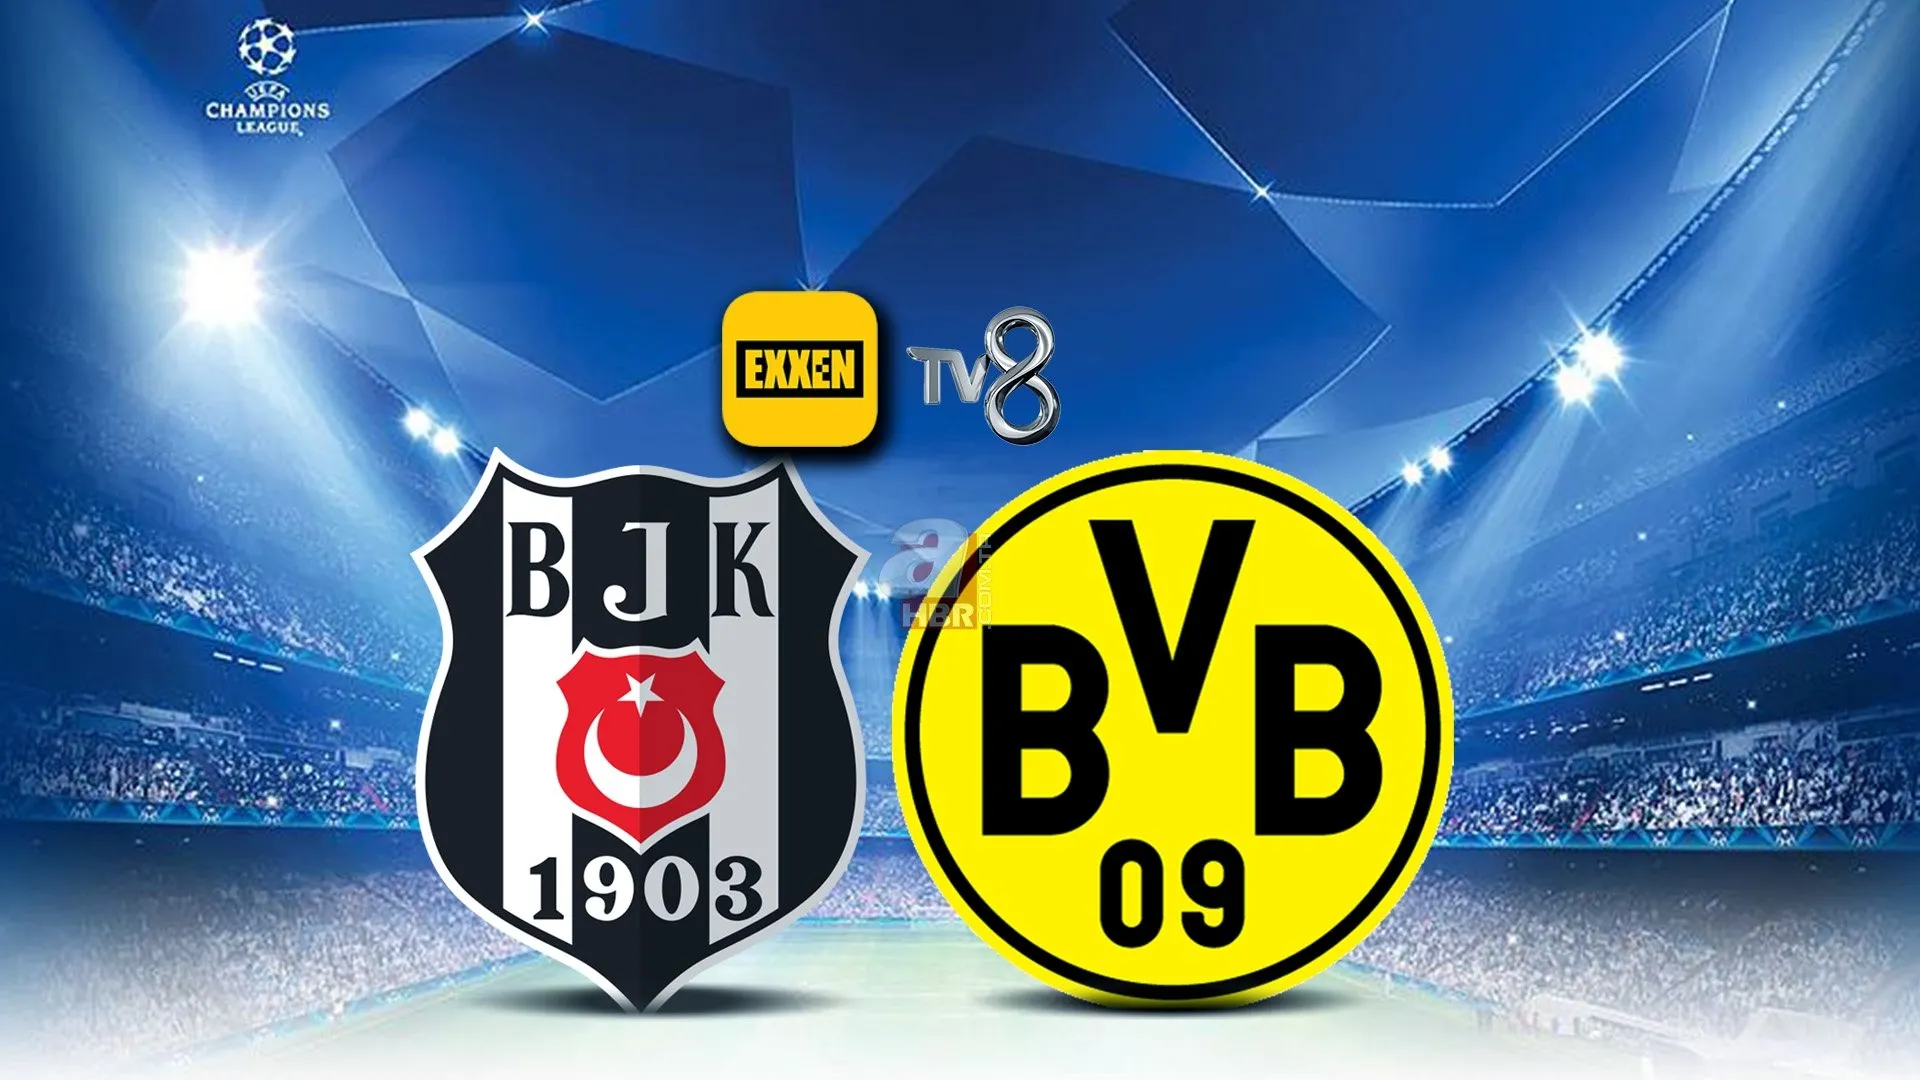 Besiktas Borussia Dortmund Maci Tv8 De Yayinlanacak Mi Sifreli Mi Sifresiz Mi 15 Eylul Tv8 Yayin Akisi